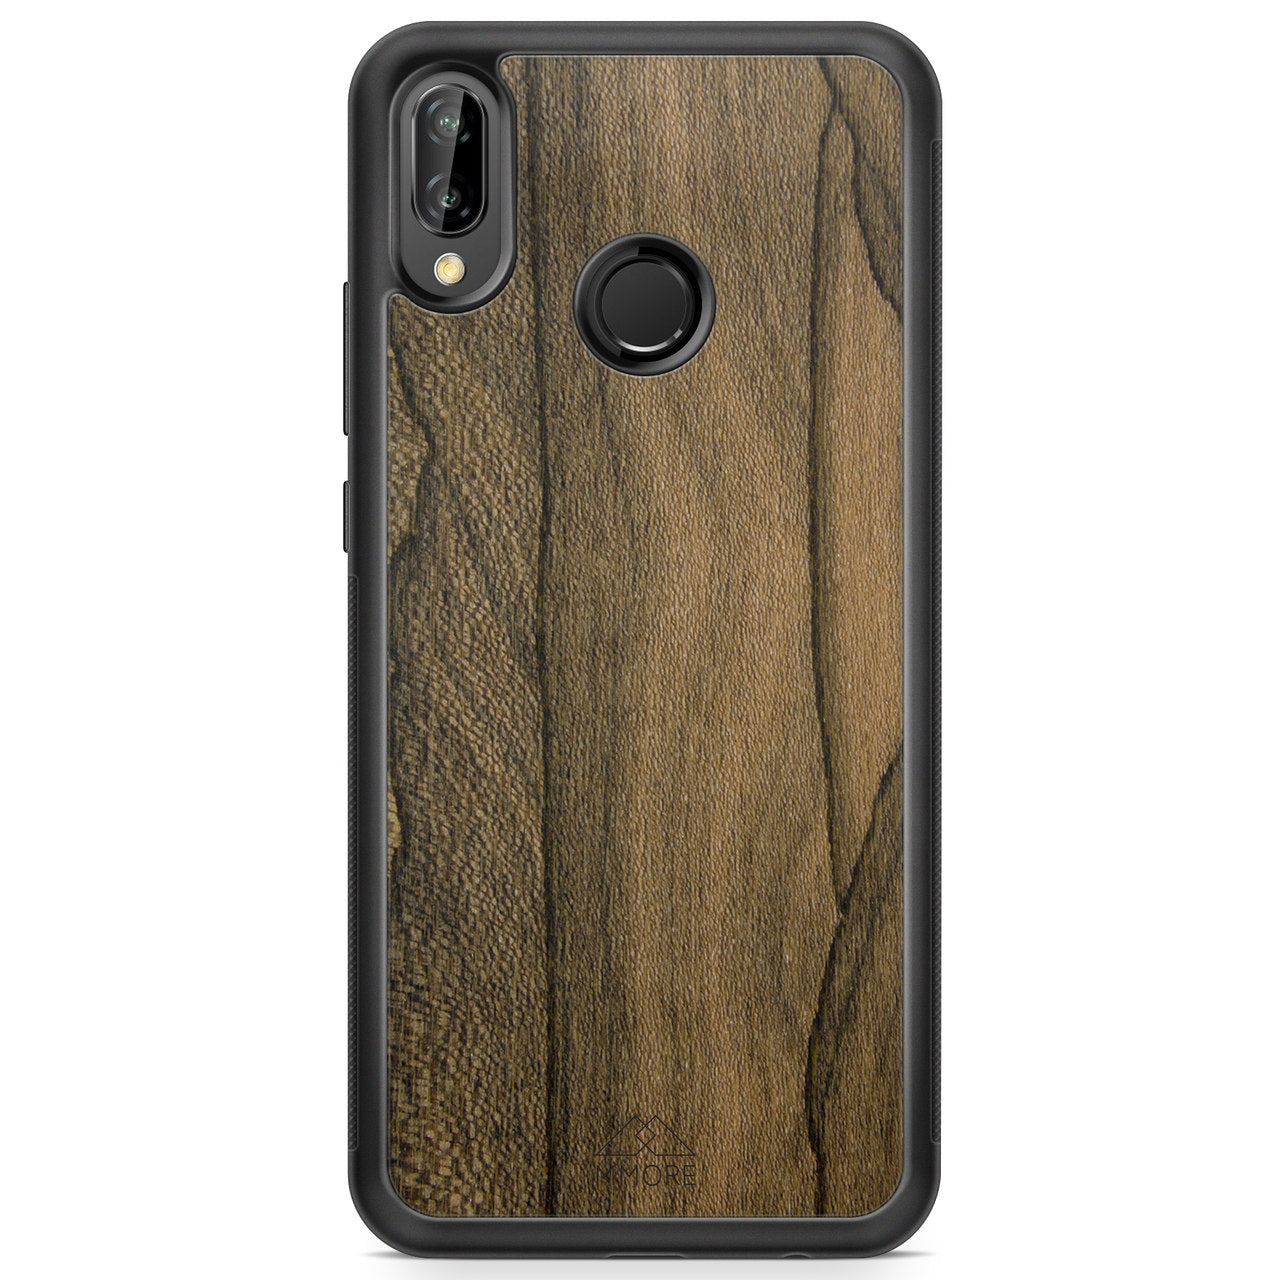 Ziricote Wood Чехол для телефона Huawei P20 Lite